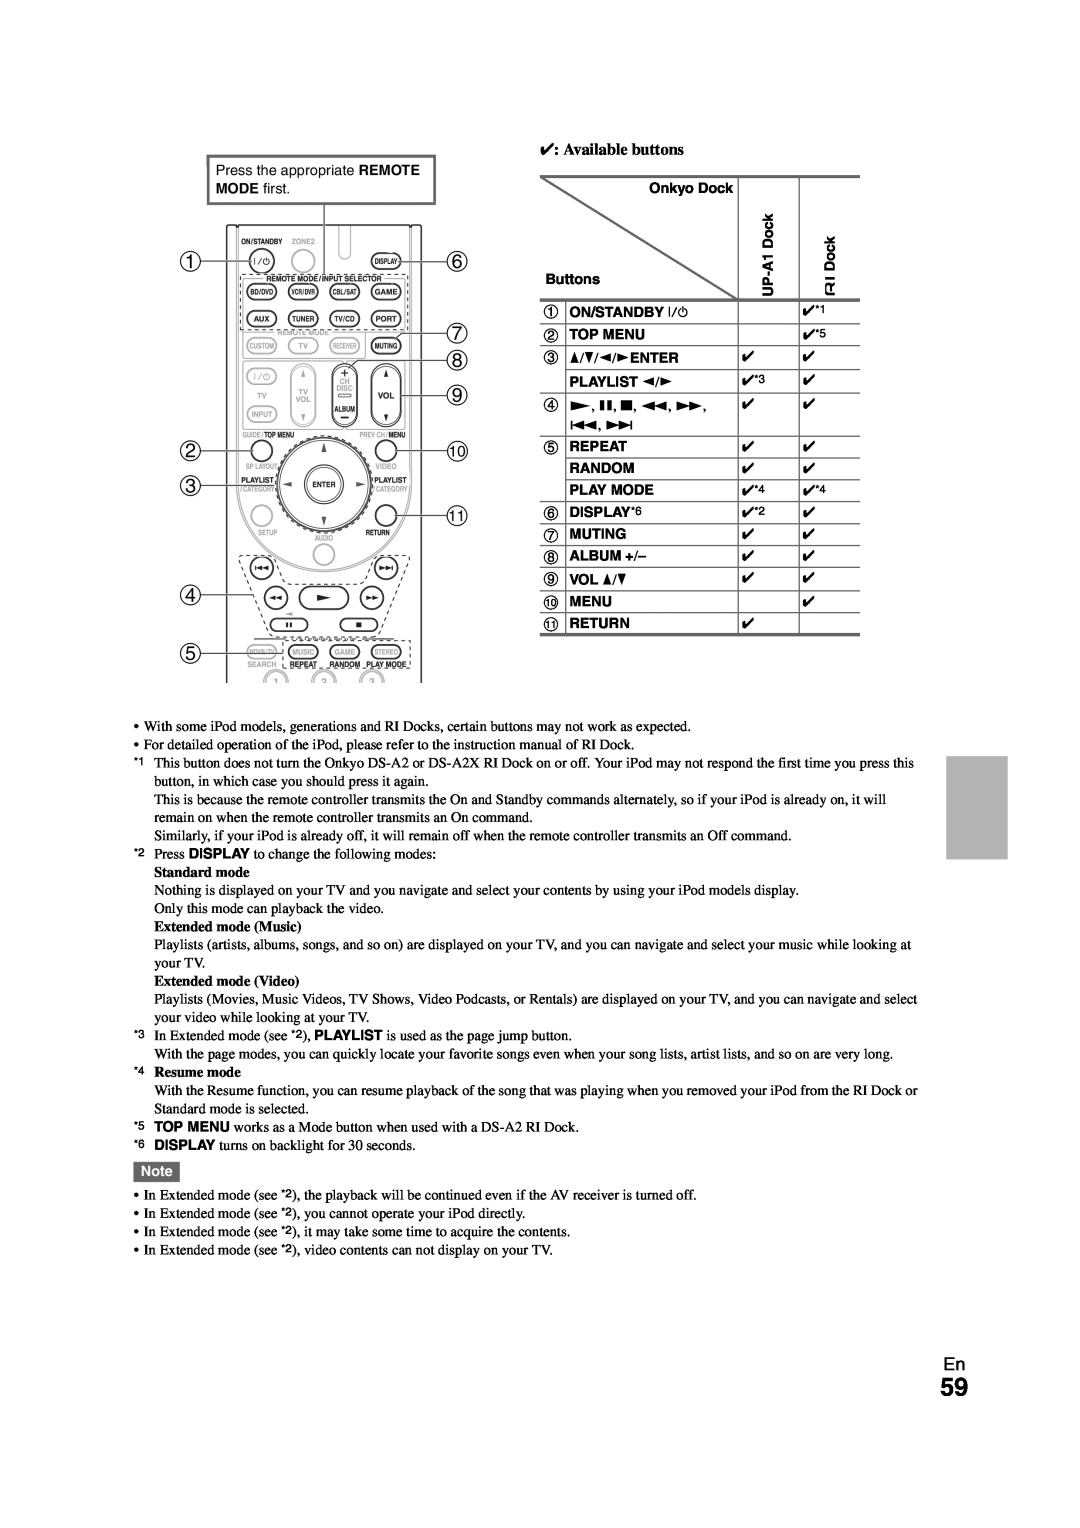 Onkyo HT-S7300 instruction manual 